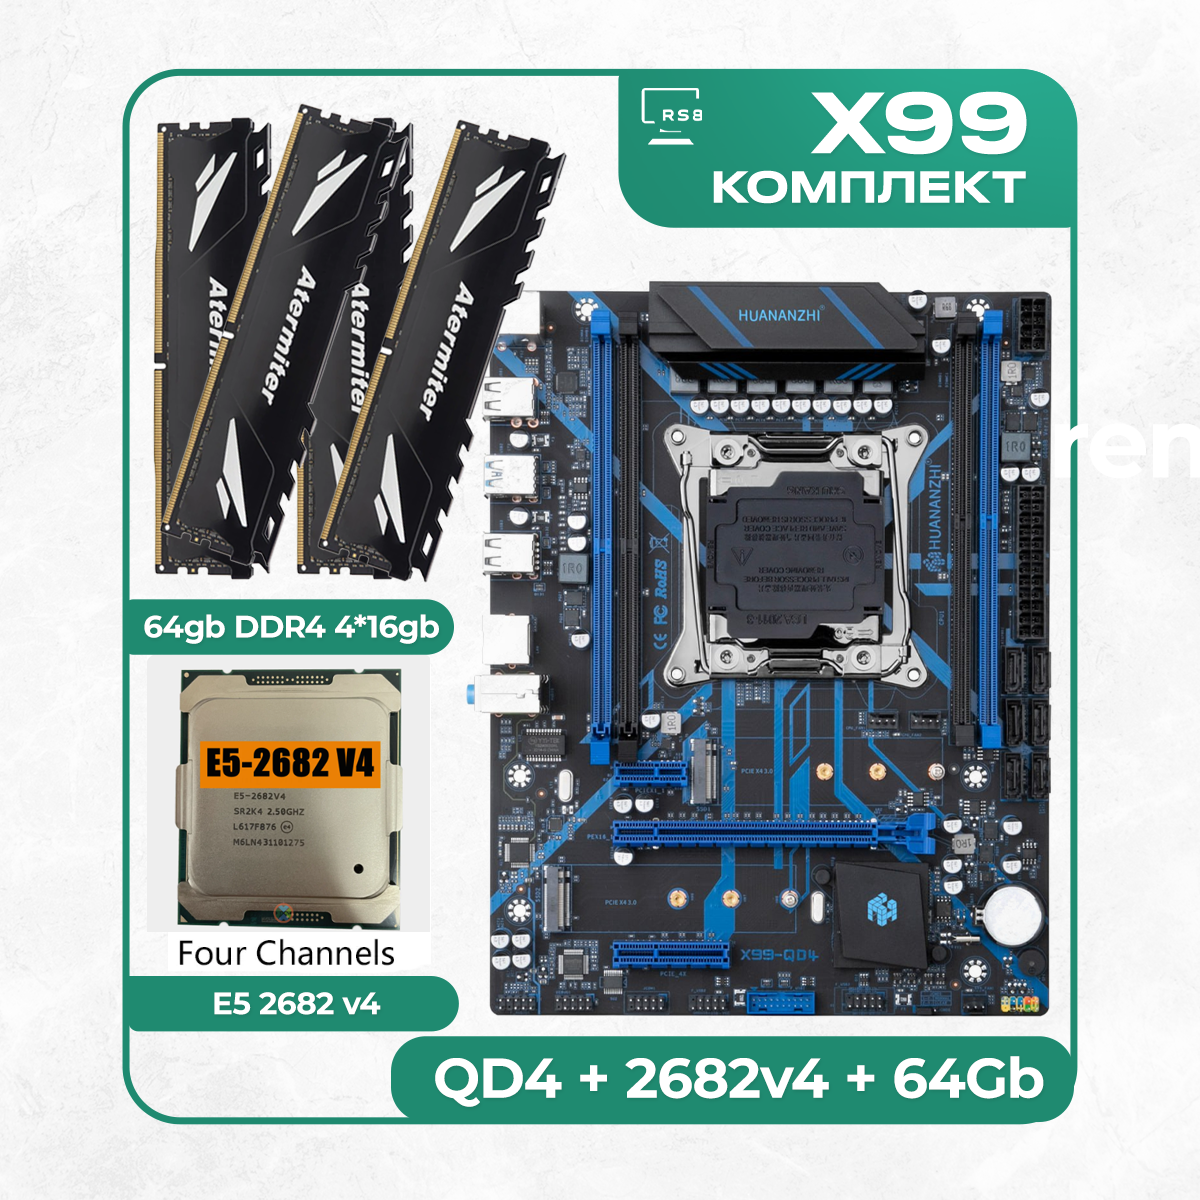 Комплект материнской платы X99: Huananzhi QD4 2011v3 + Xeon E5 2667v4 + DDR4 2666Мгц Atermiter 4шт